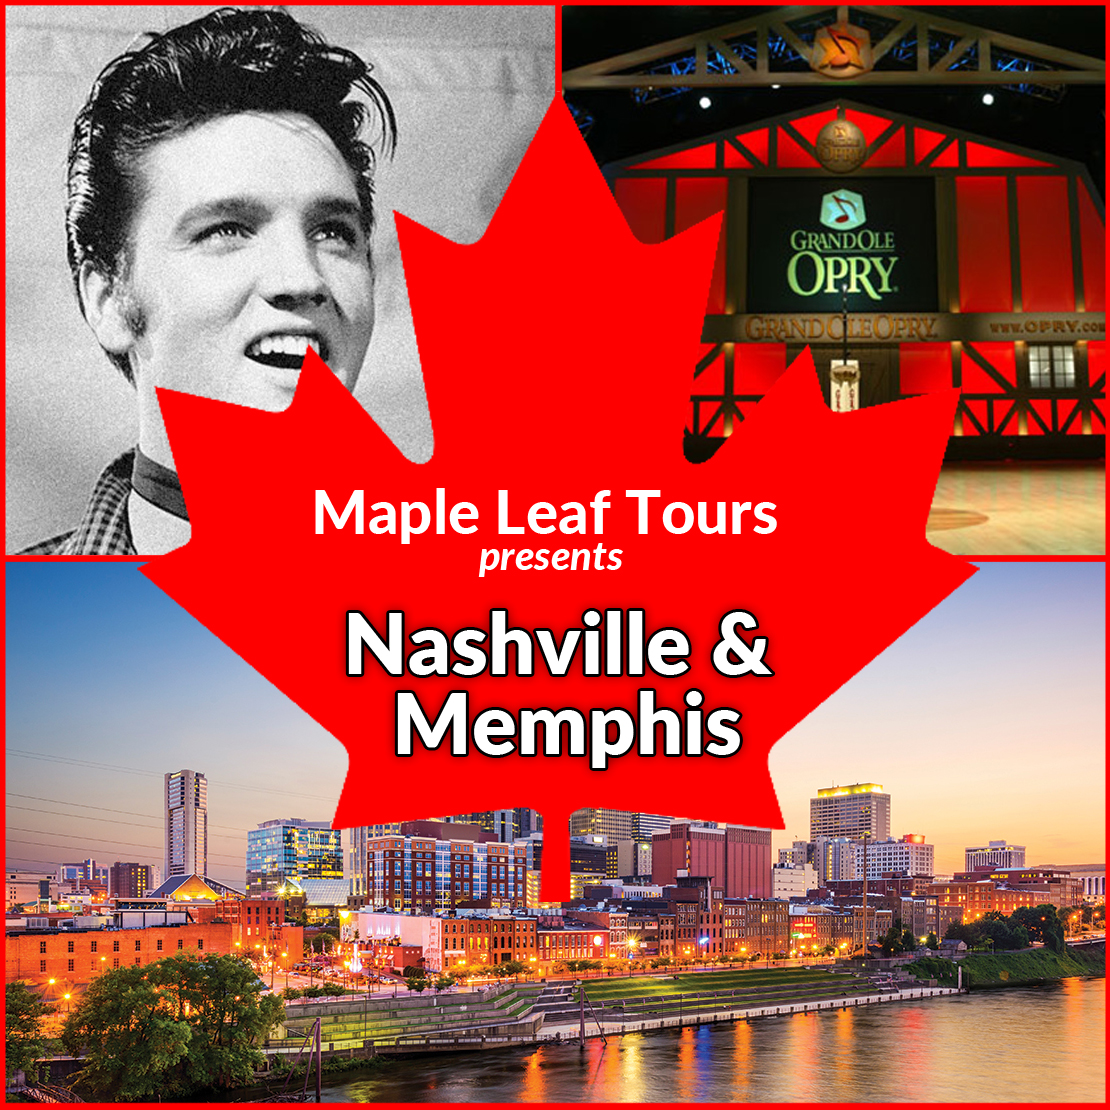 Nashville & Memphis: Traditional Sept